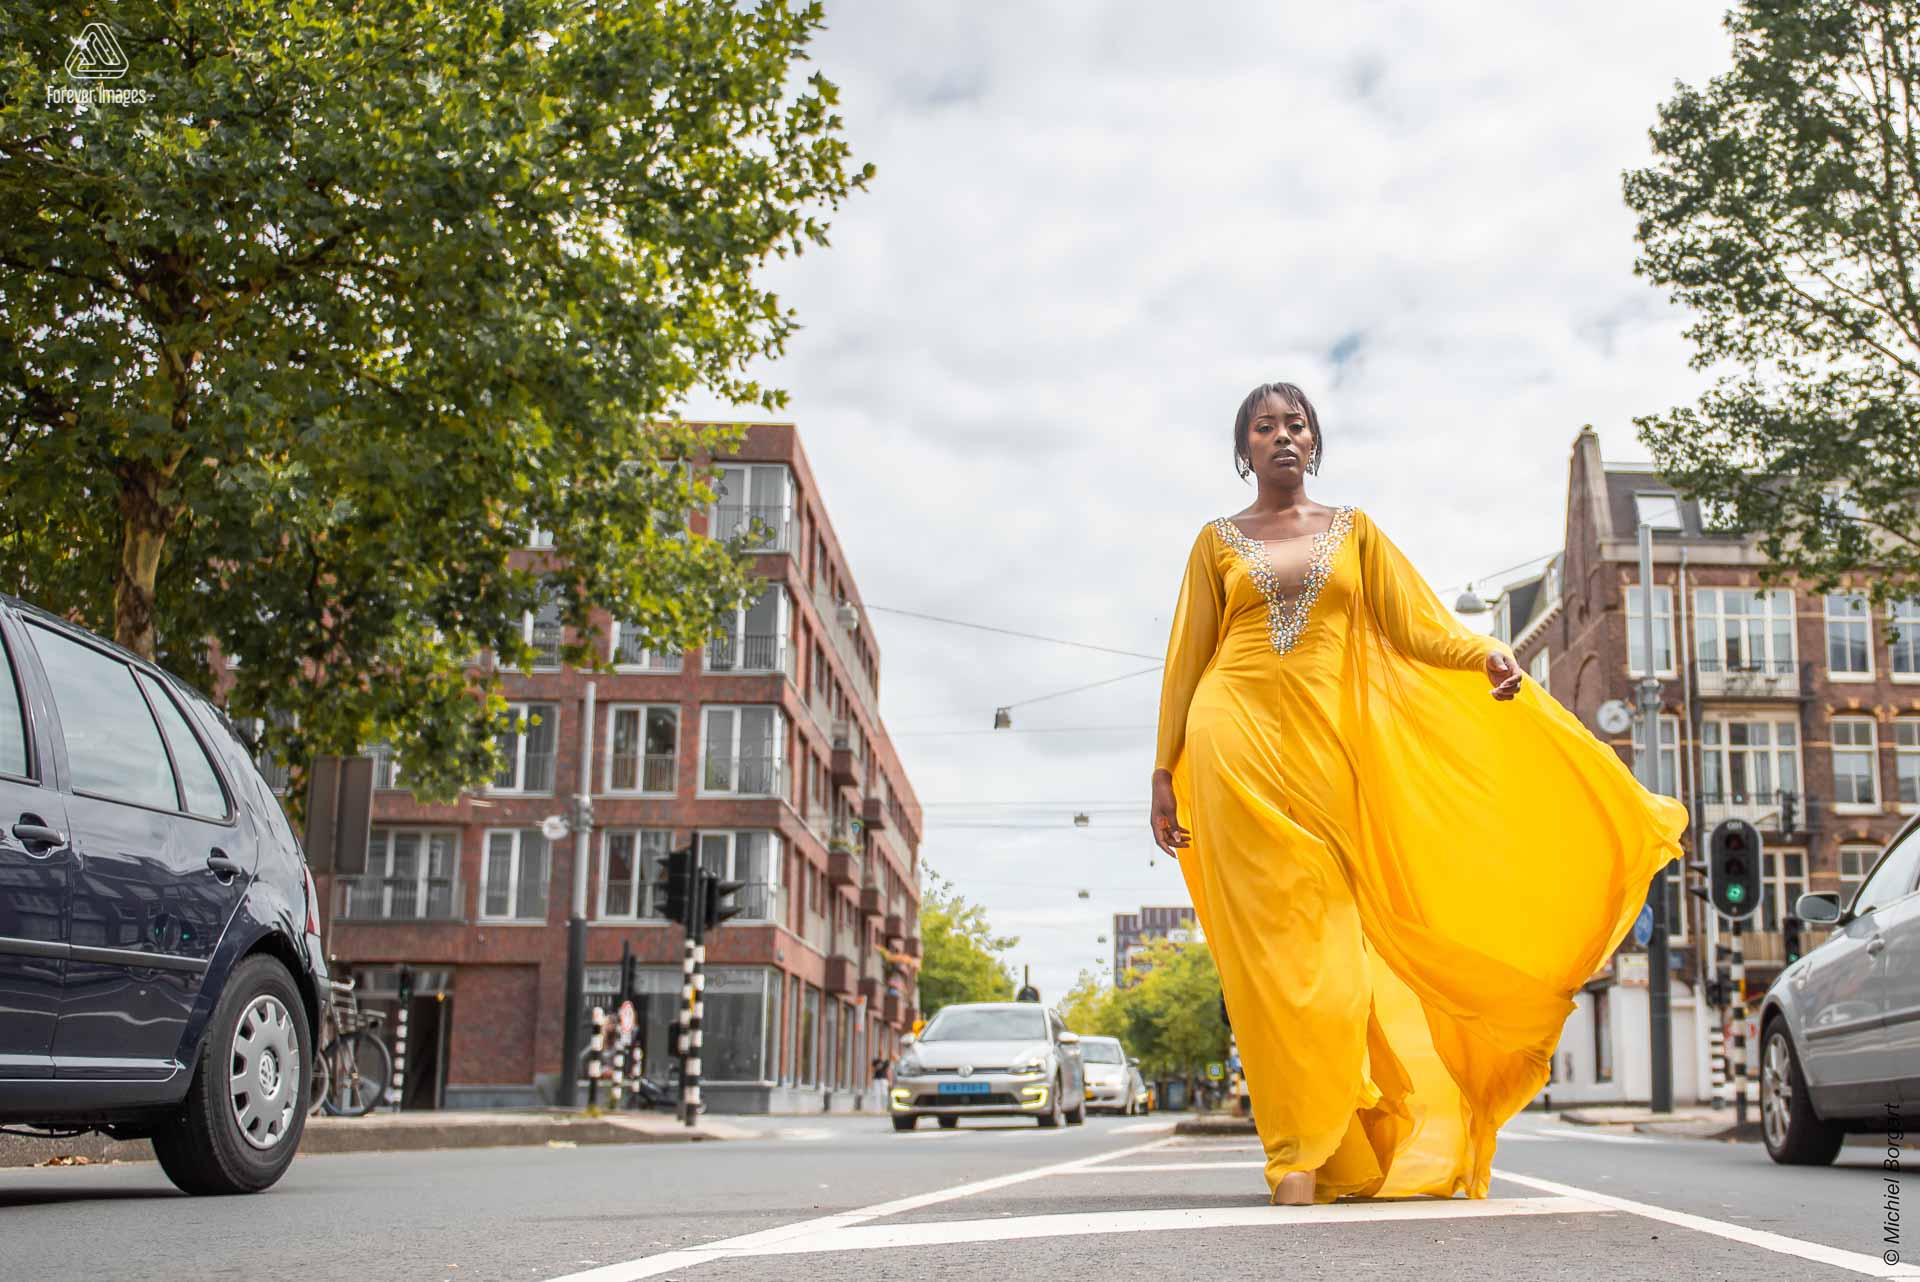 Fashion photo urben shoot yellow dress car Amsterdam | Mariana Pietersz David Cardenas Miss Avantgarde | Fashion Photographer Michiel Borgart - Forever Images.